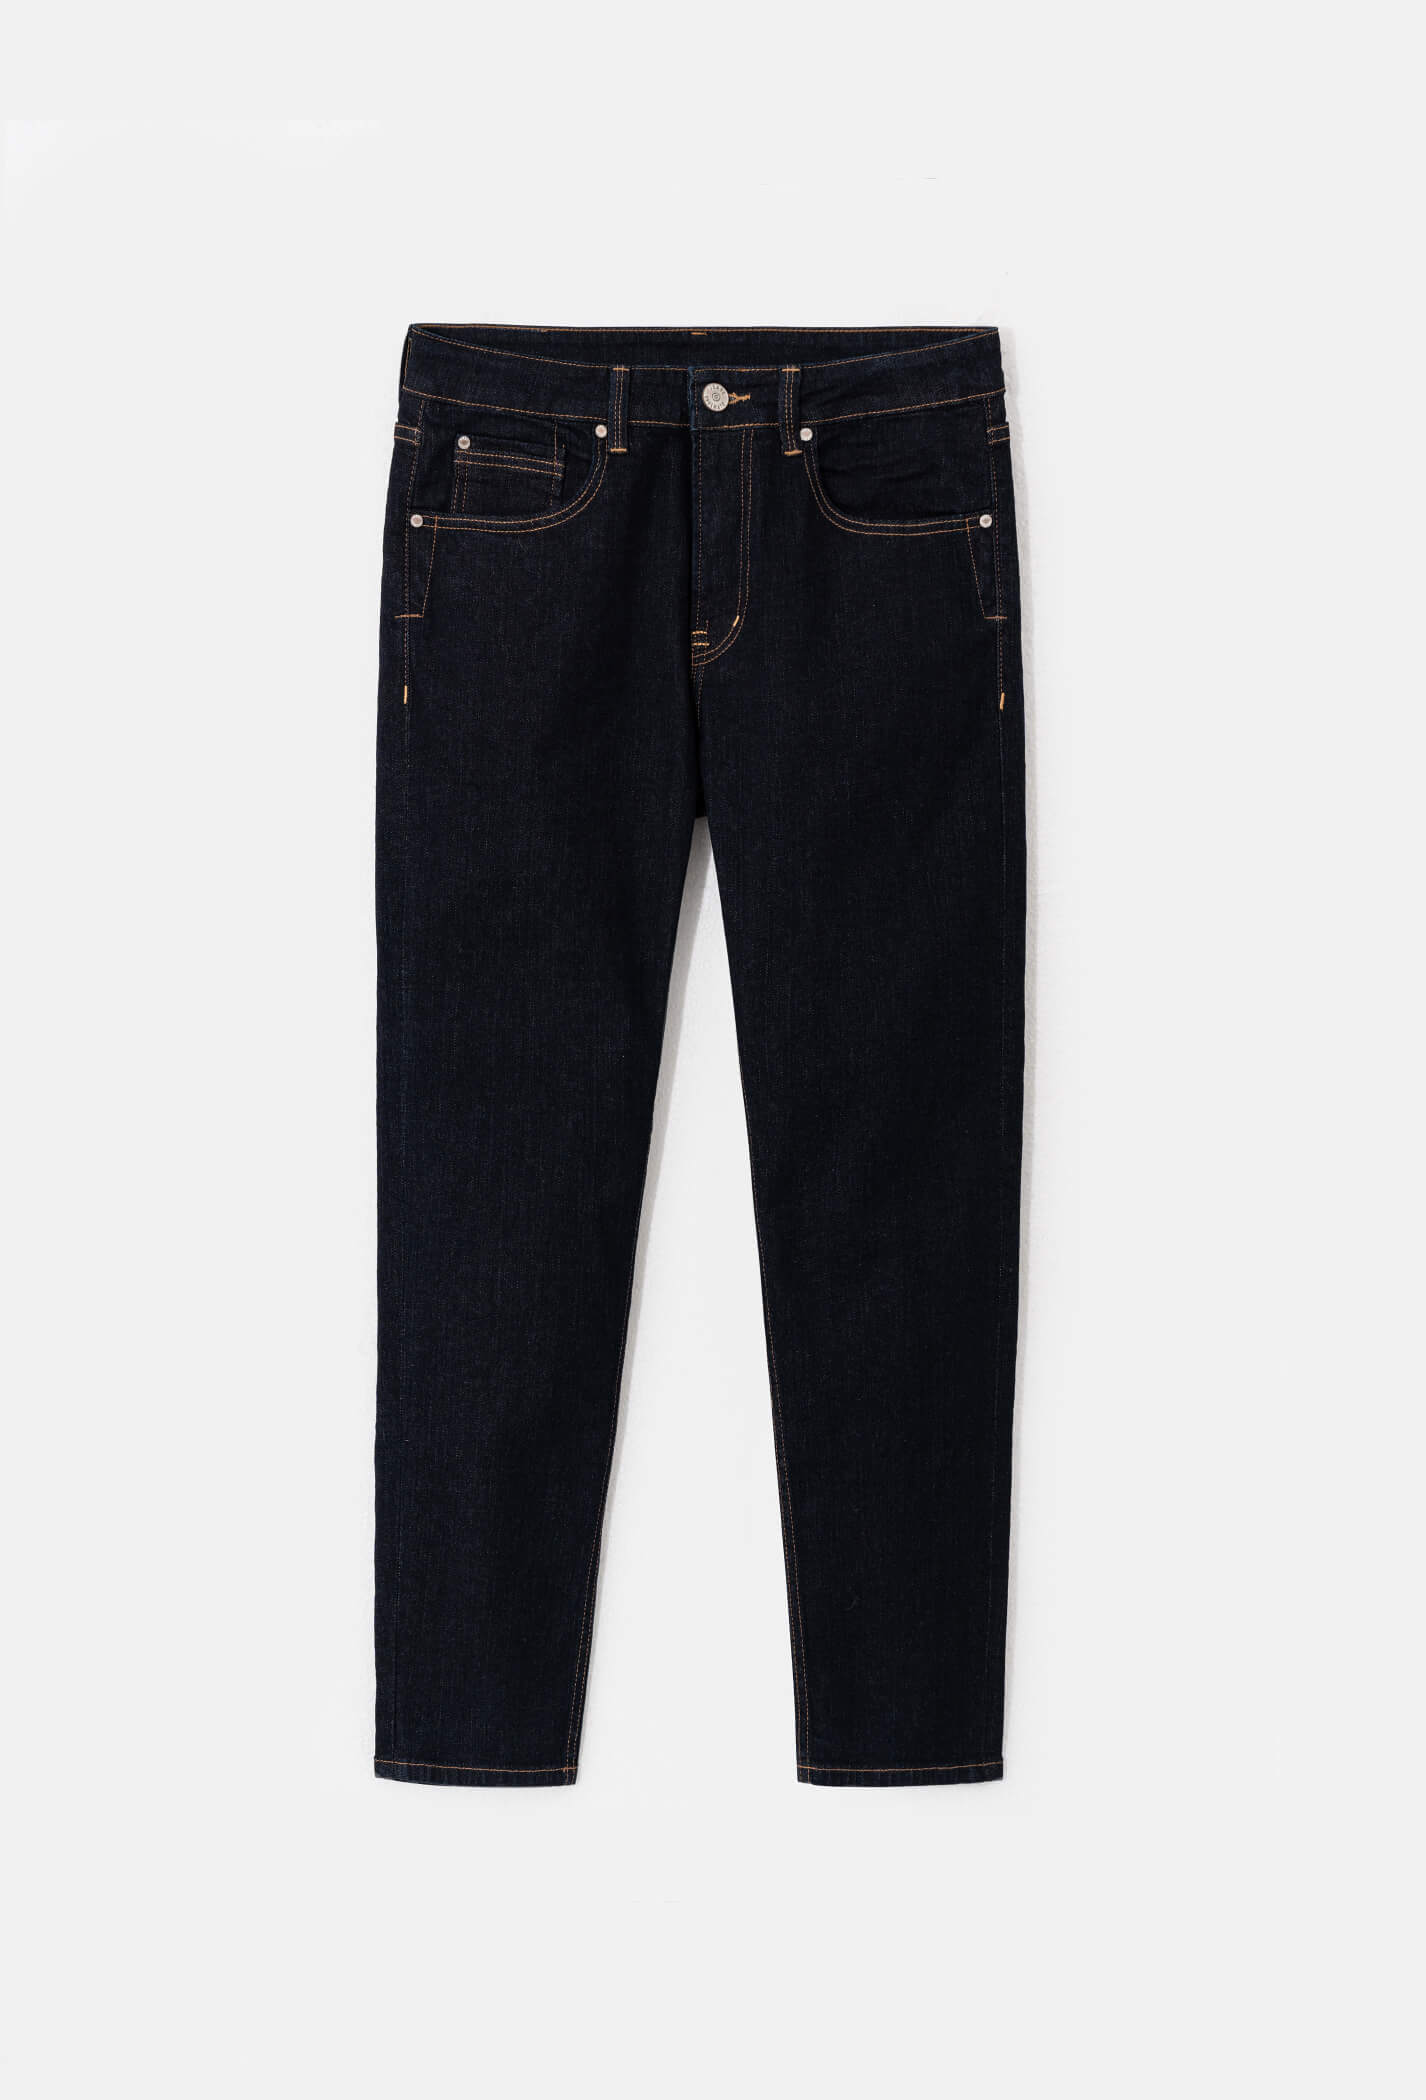 Quần Jeans Basic Slim V2 Xanh garment 1